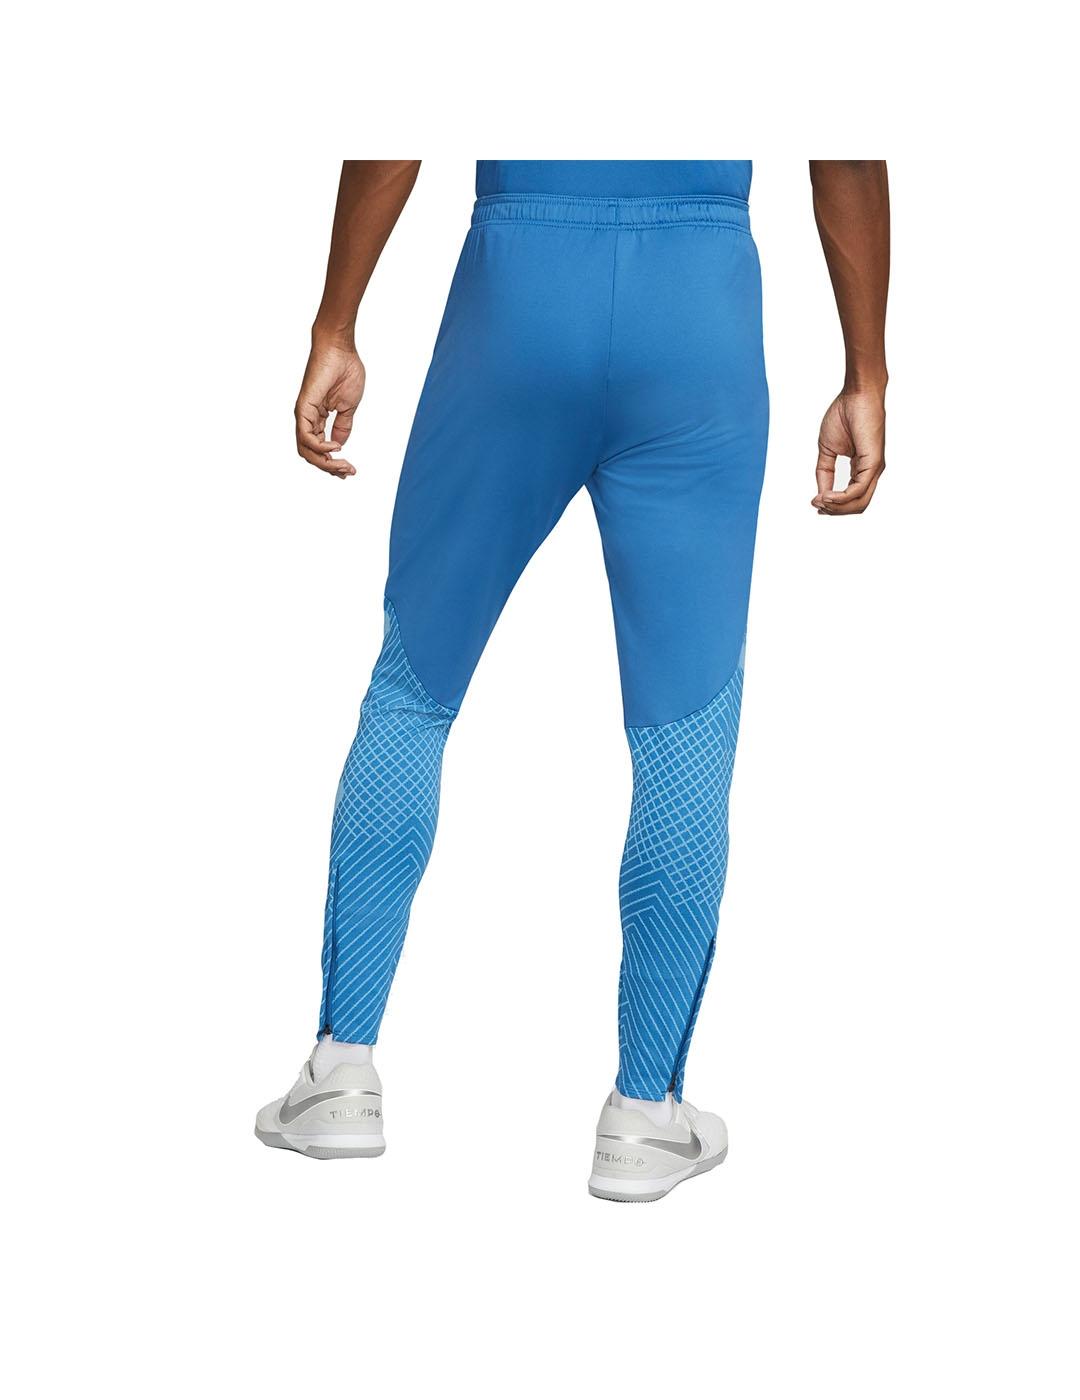 Pantalon Hombre Nike Dri-FIT Strk Azul